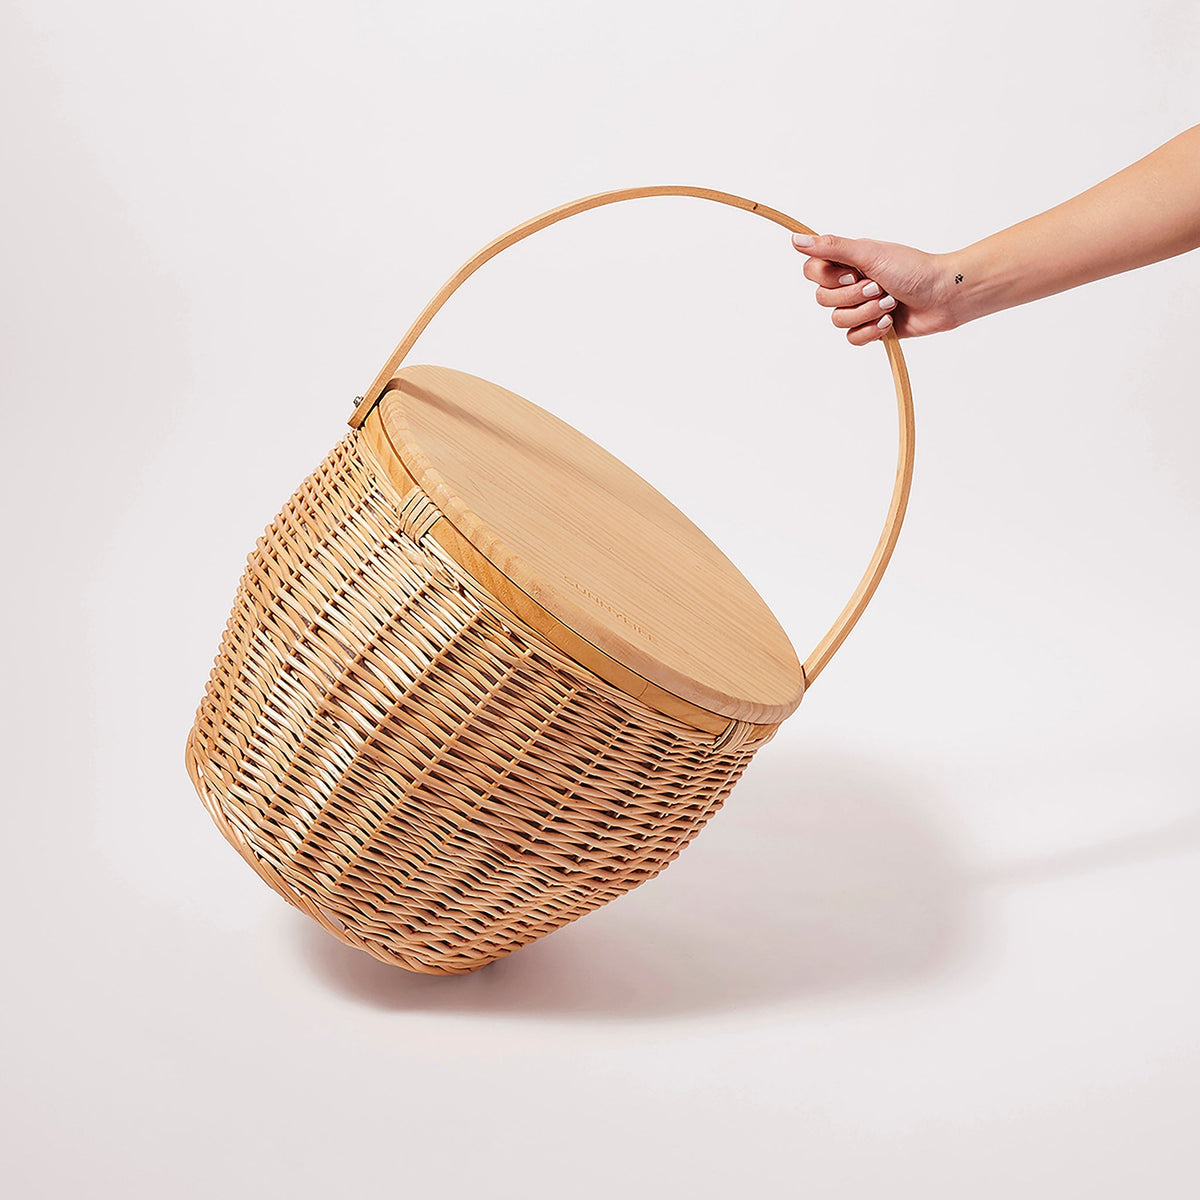 Round Picnic Cooler Basket - Natural